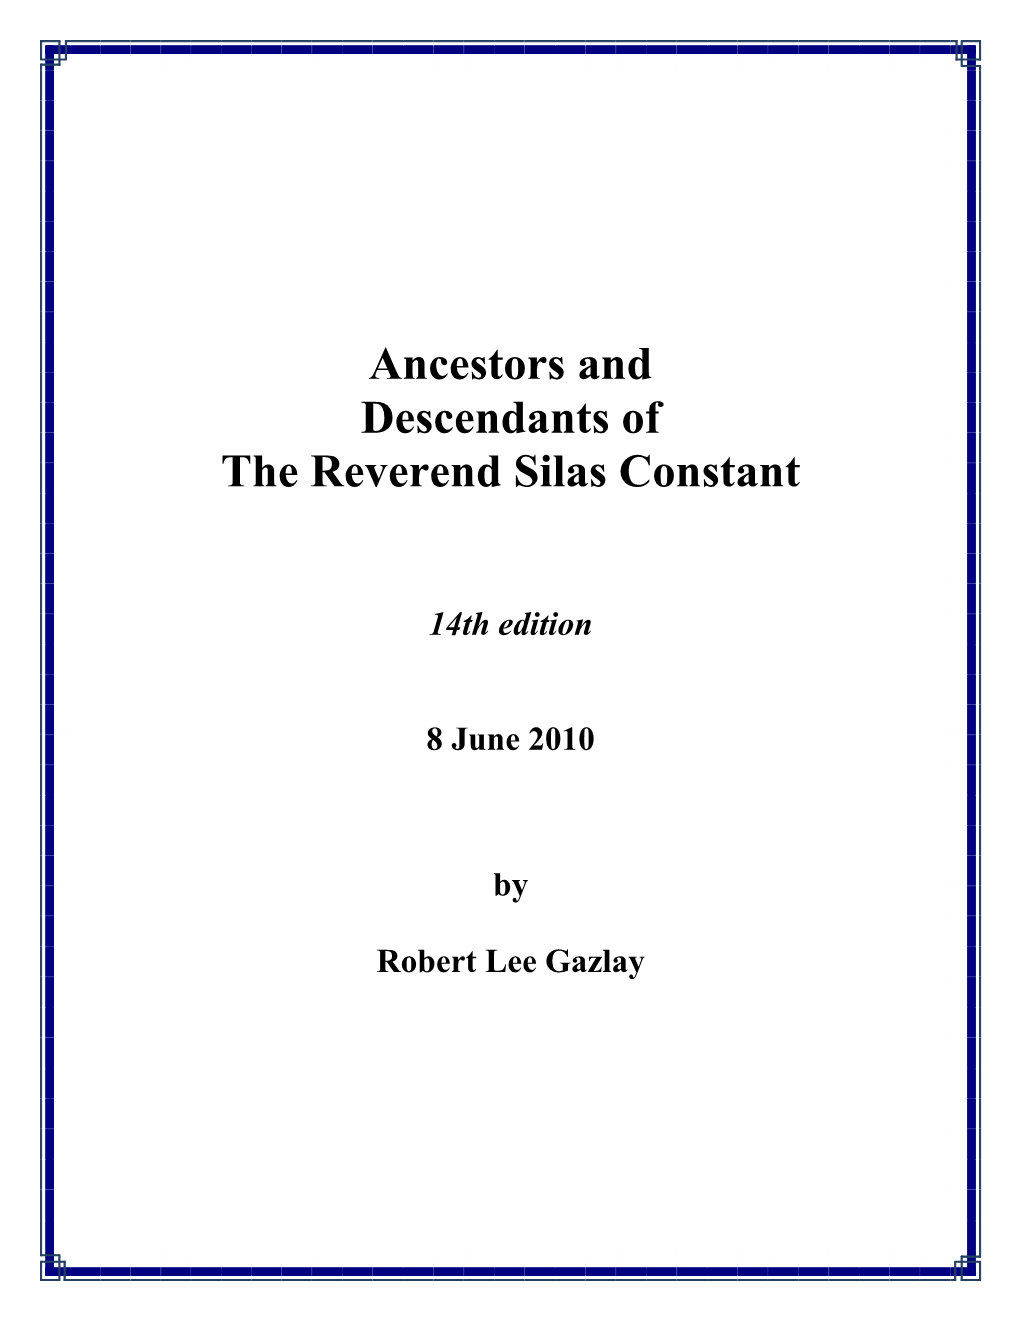 Ancestors and Descendants of the Reverend Silas Constant